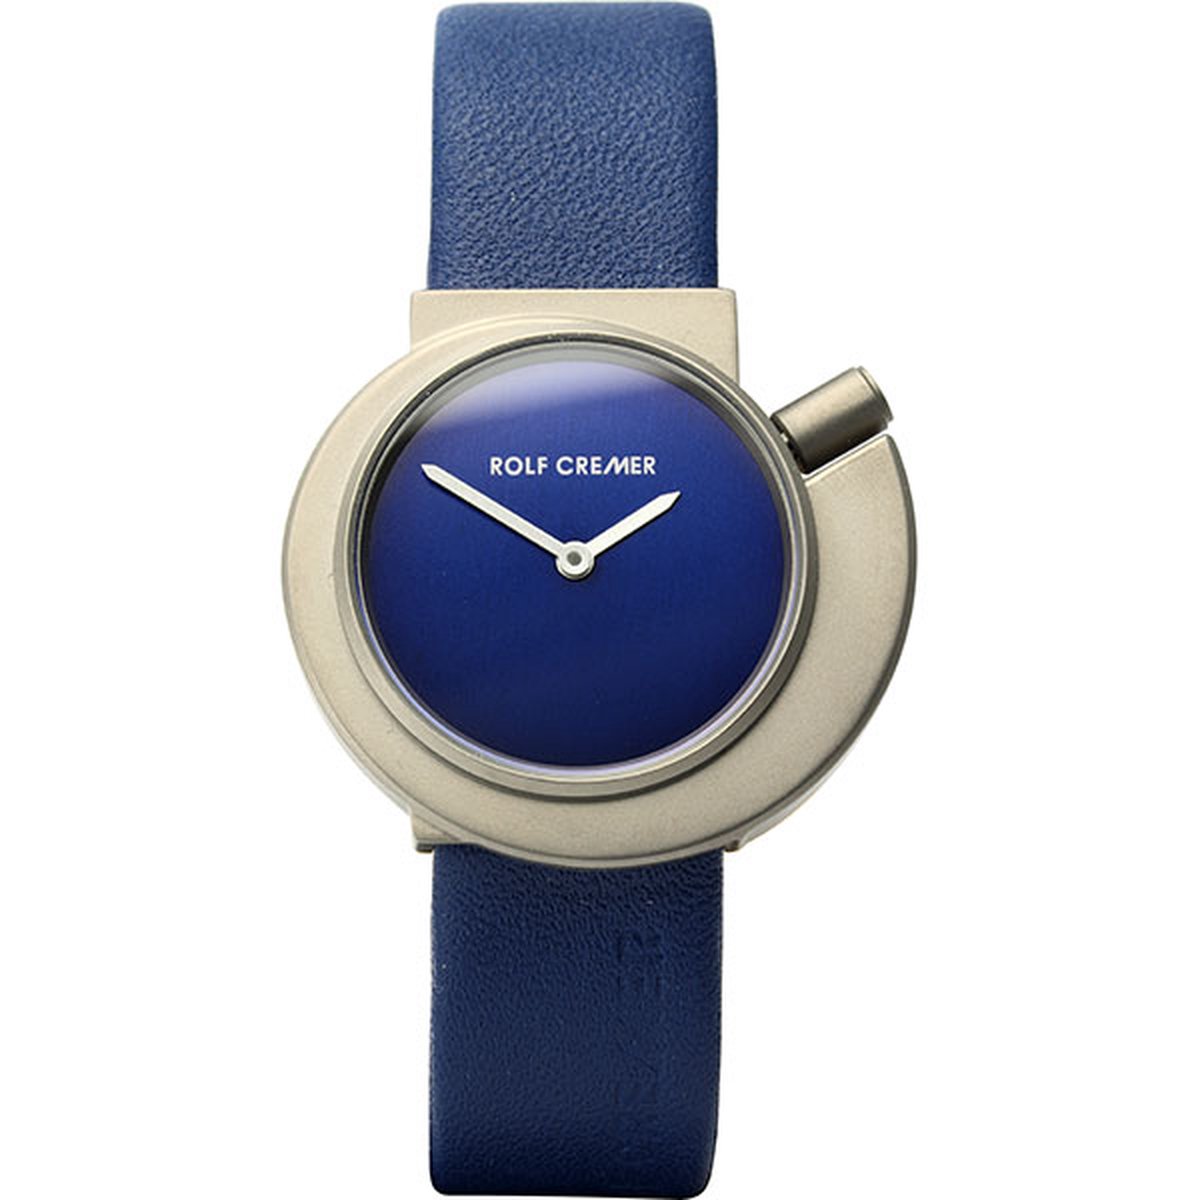 Rolf Cremer SPIRALE II 496901 - horloge - dames - blauwe horloge - titanium - kalfsleer - cadeautip